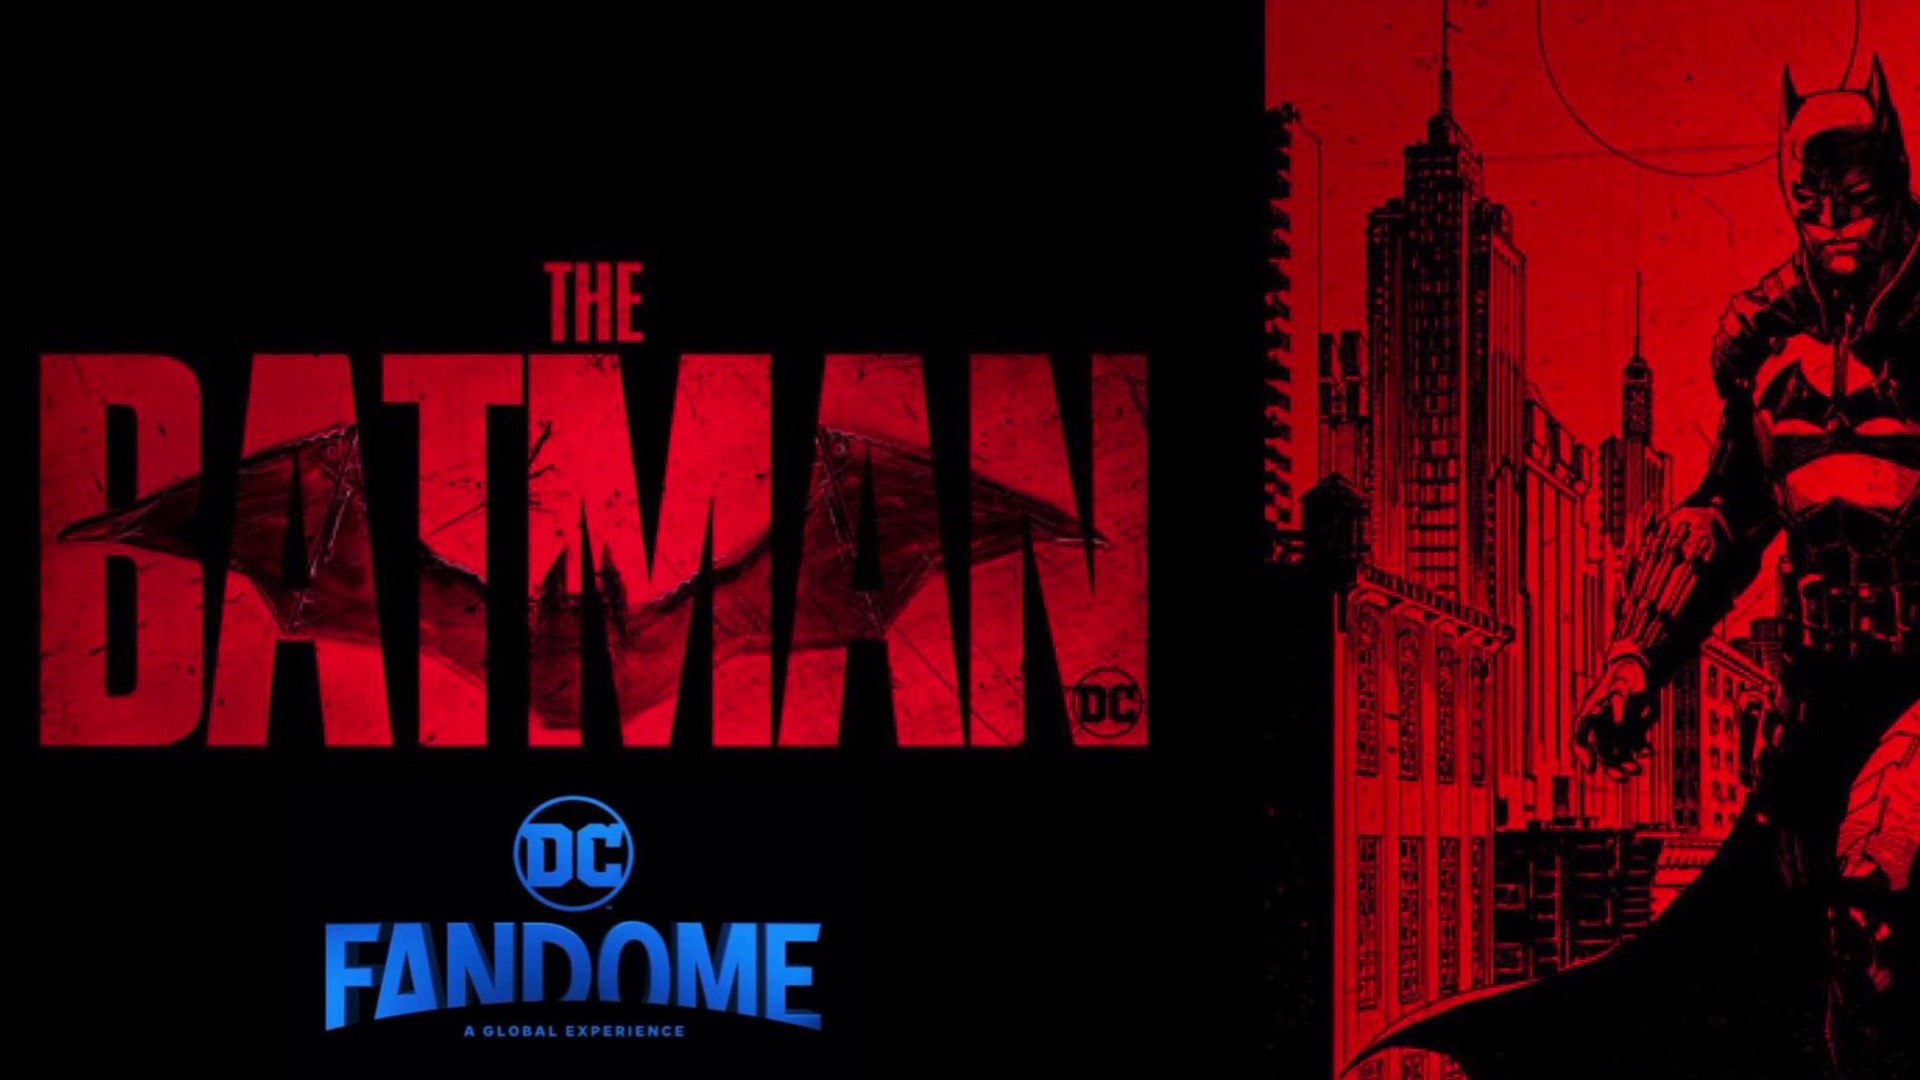 DC FANDOME Black adam, the batman news | Kate bishop cast confirm and Eternal trailer coming soon